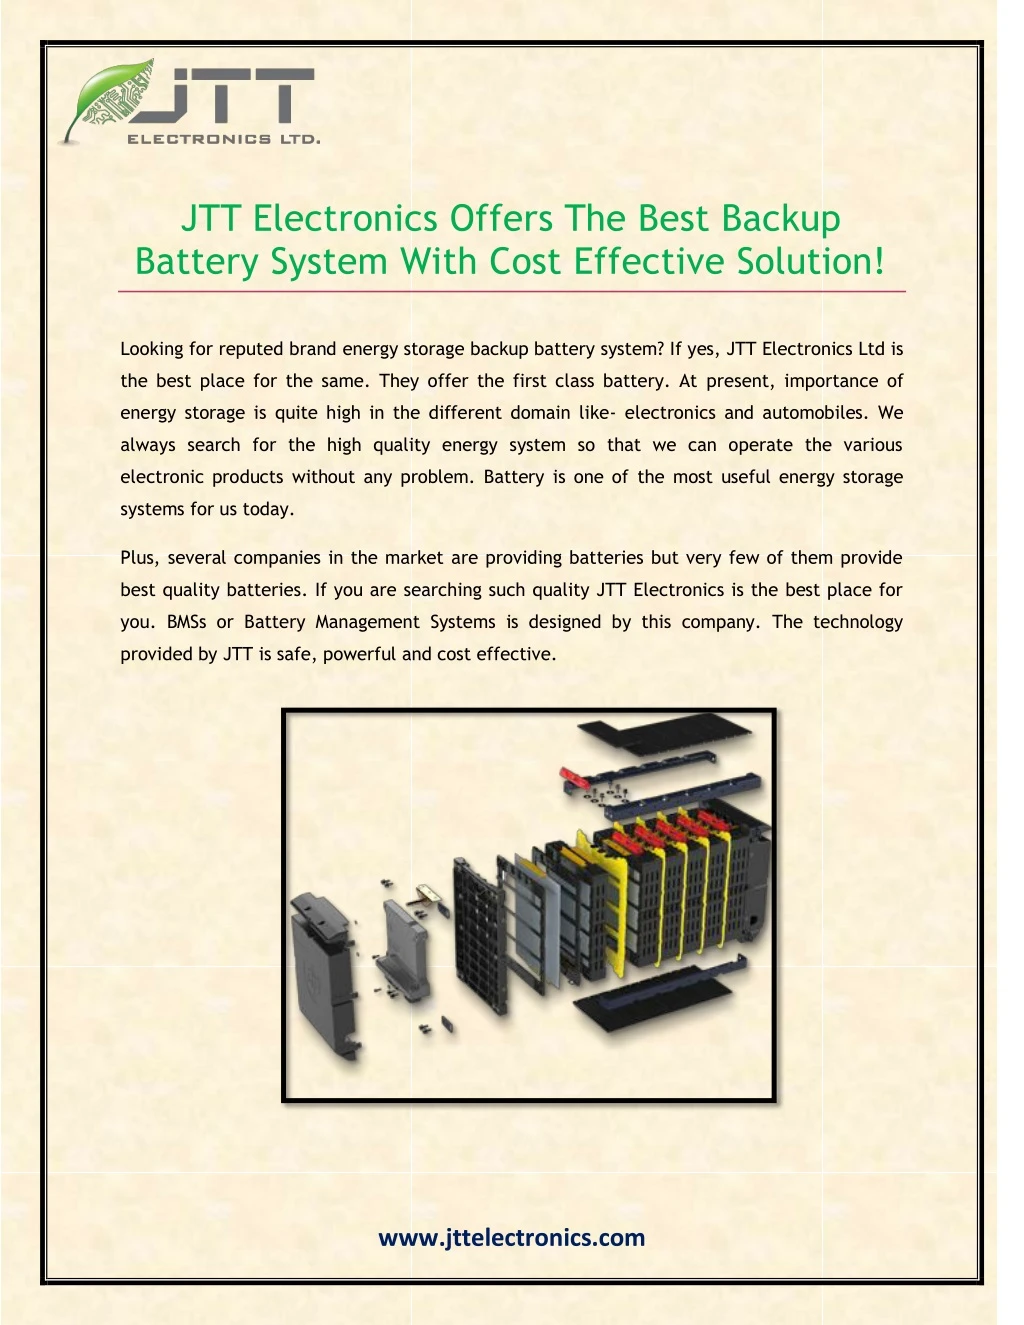 jtt electronics offers the best backup battery